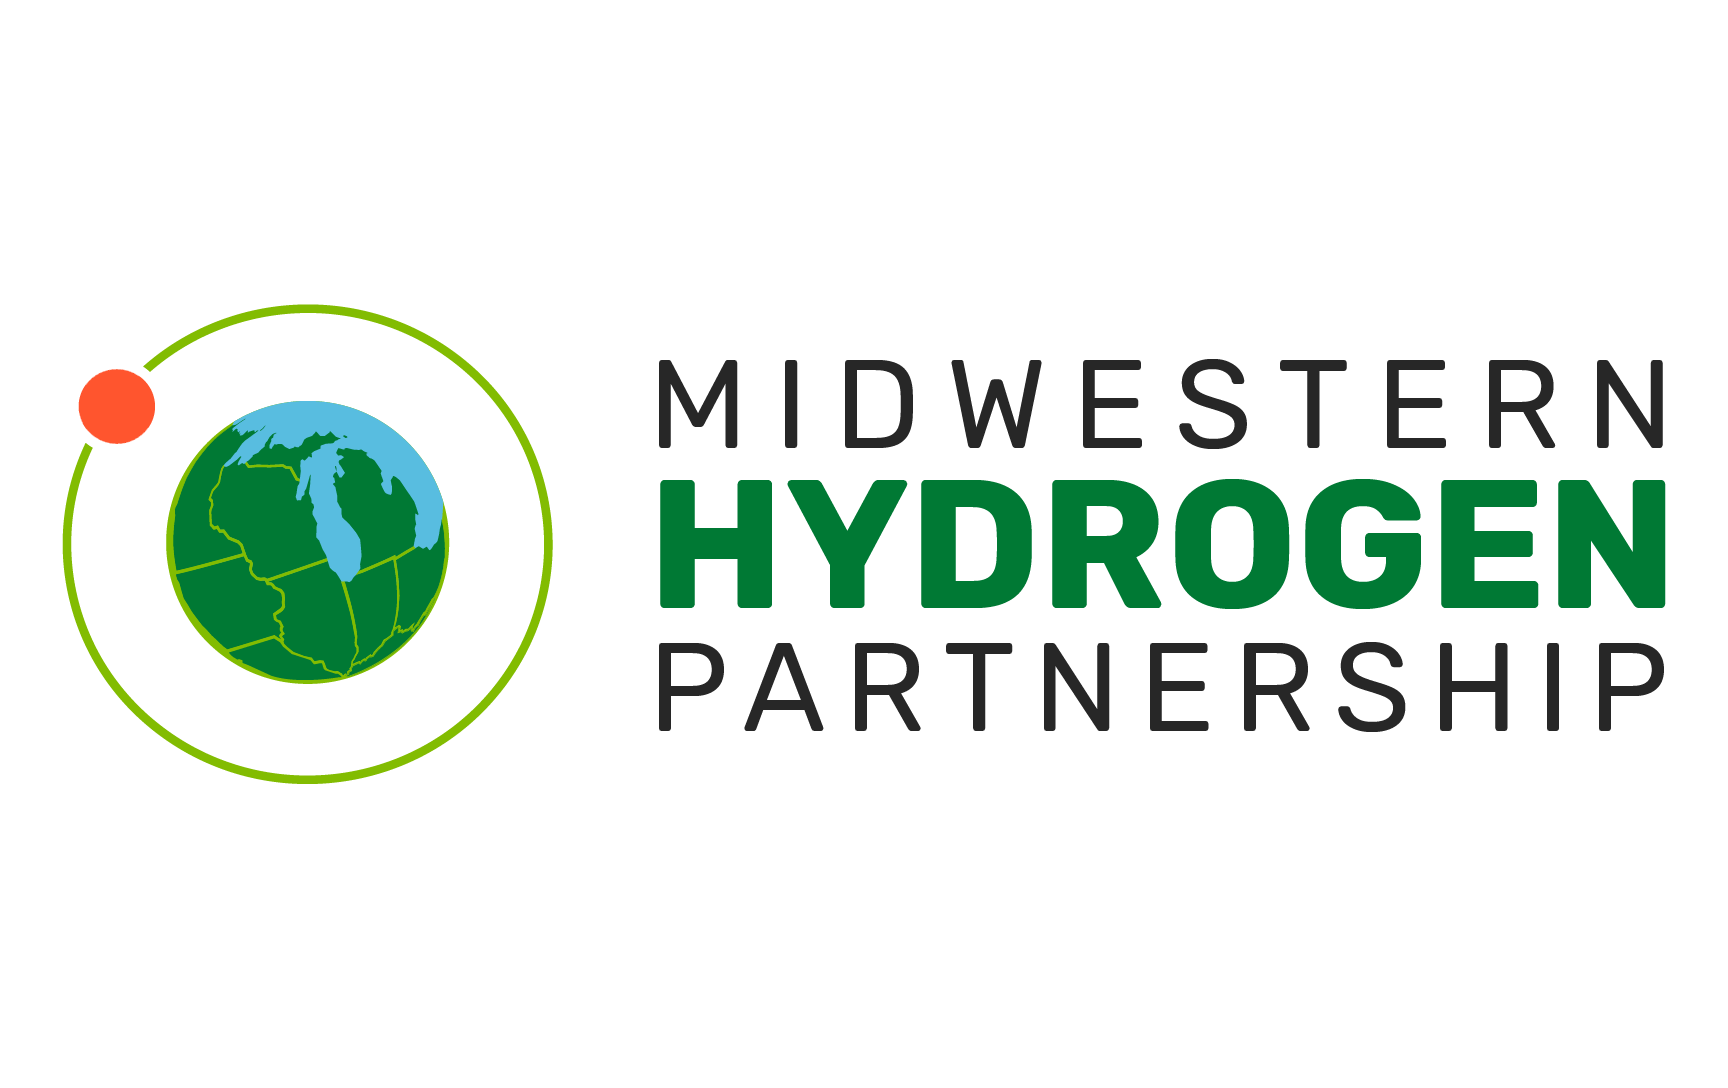 Midwestern Hydrogen Partnership